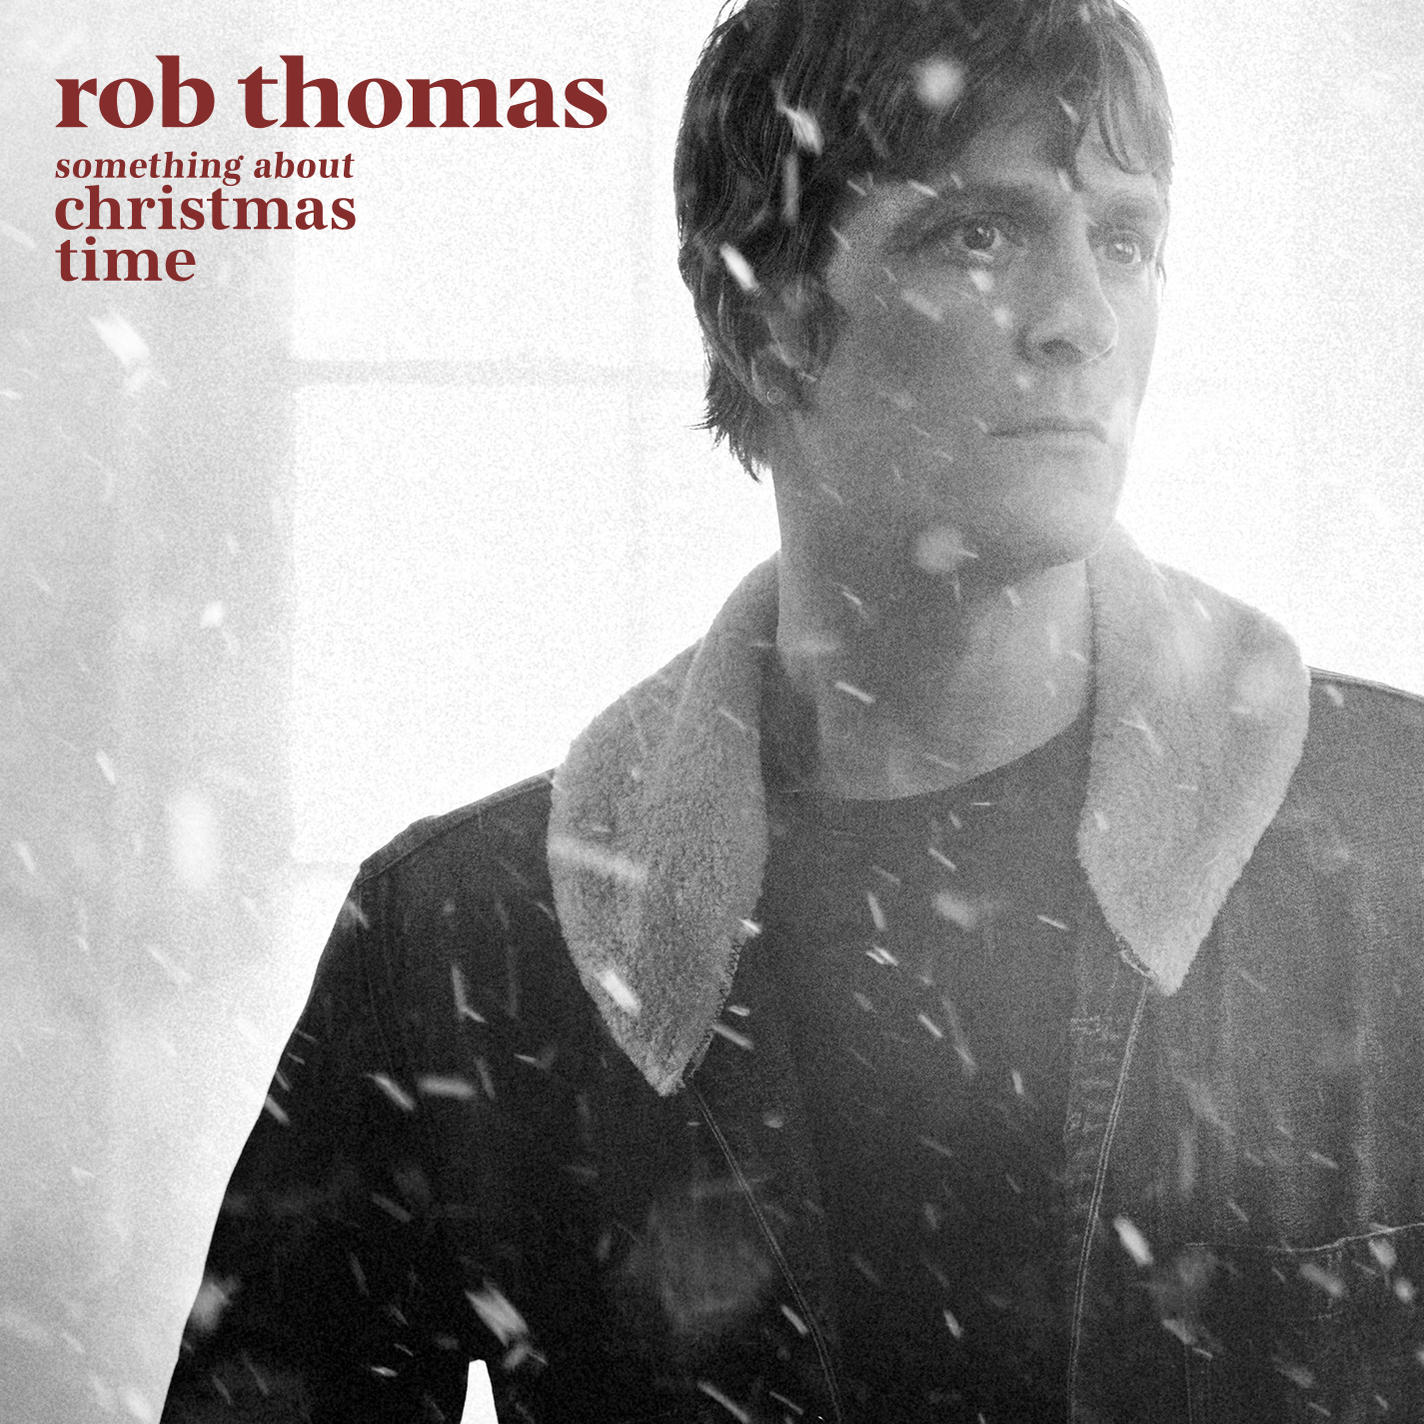 SOMETHING (Vinyl) - ABOUT CHRISTMAS Thomas Rob - TIME